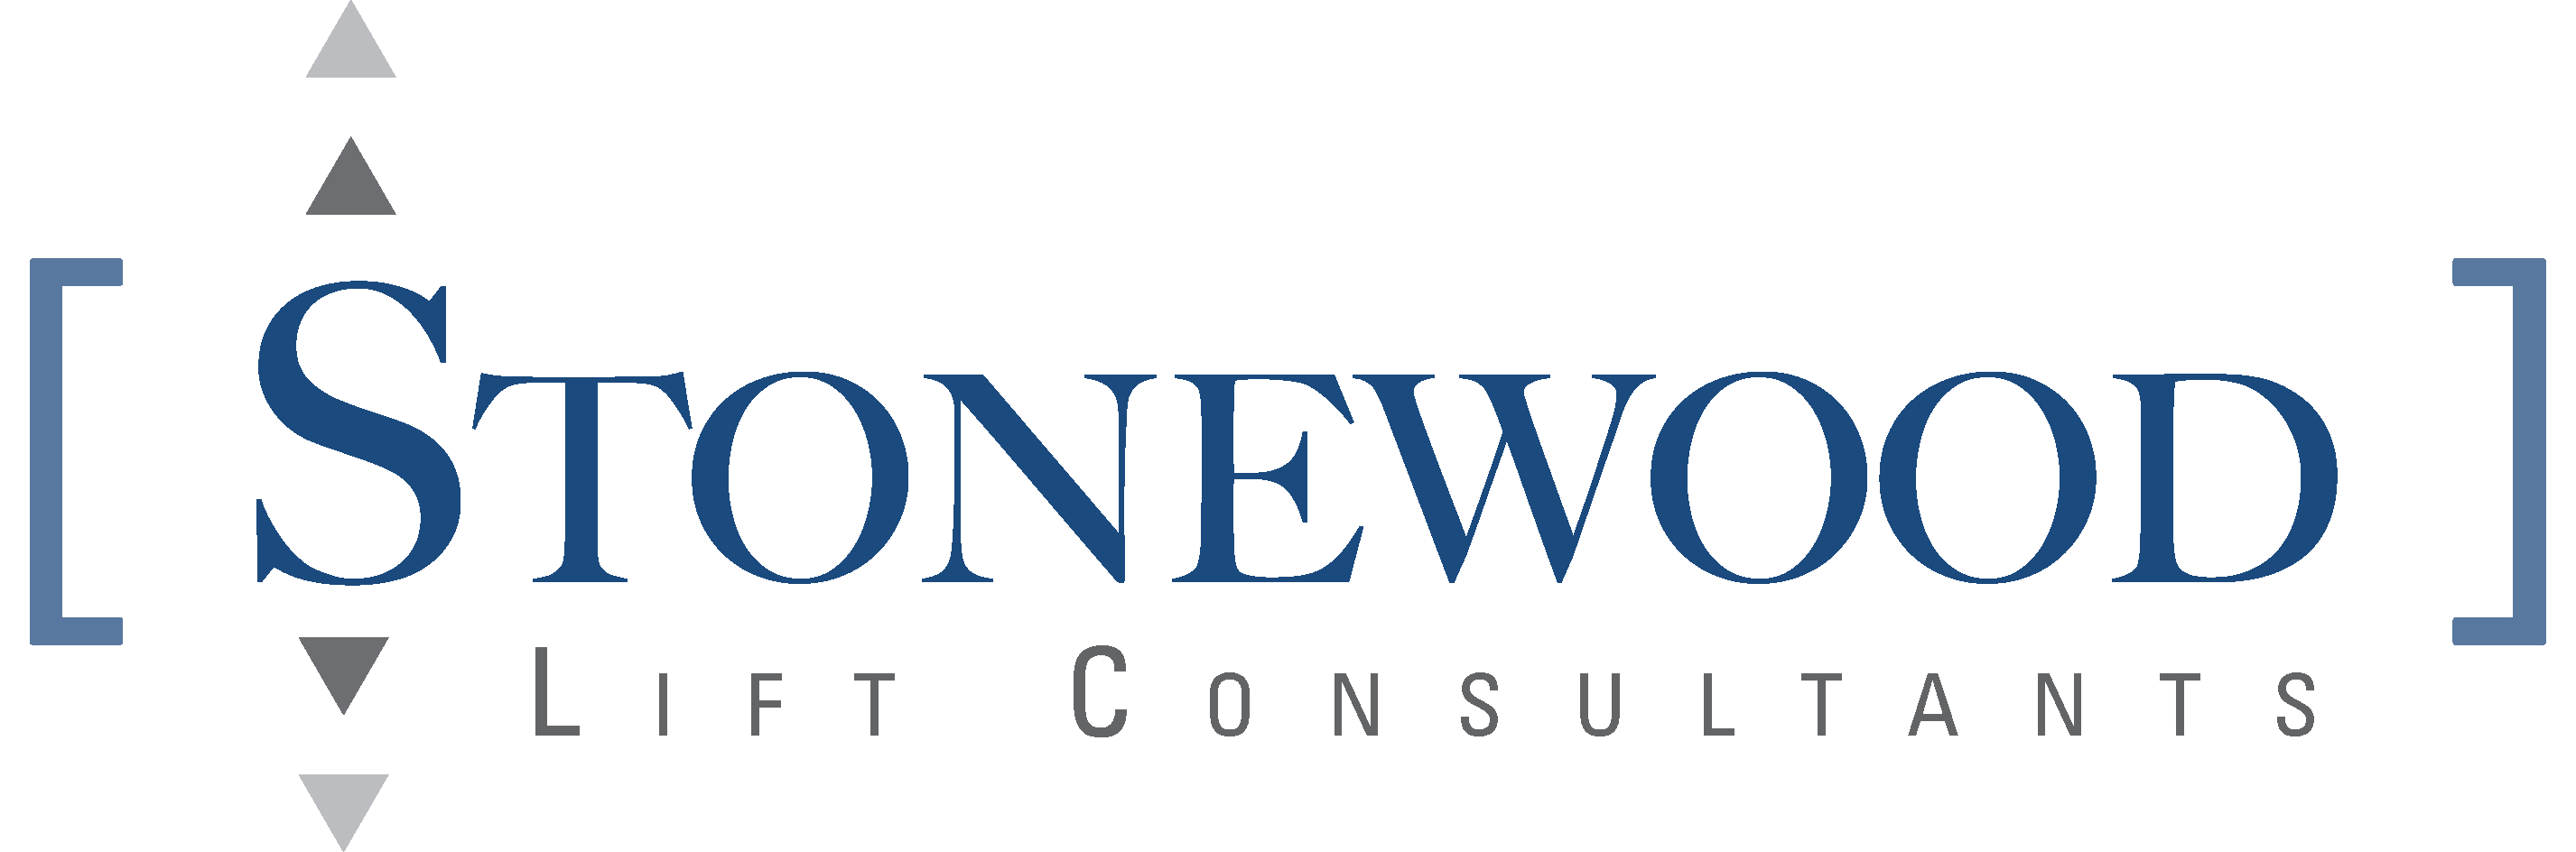 Stonewood Lift Consultants Ltd